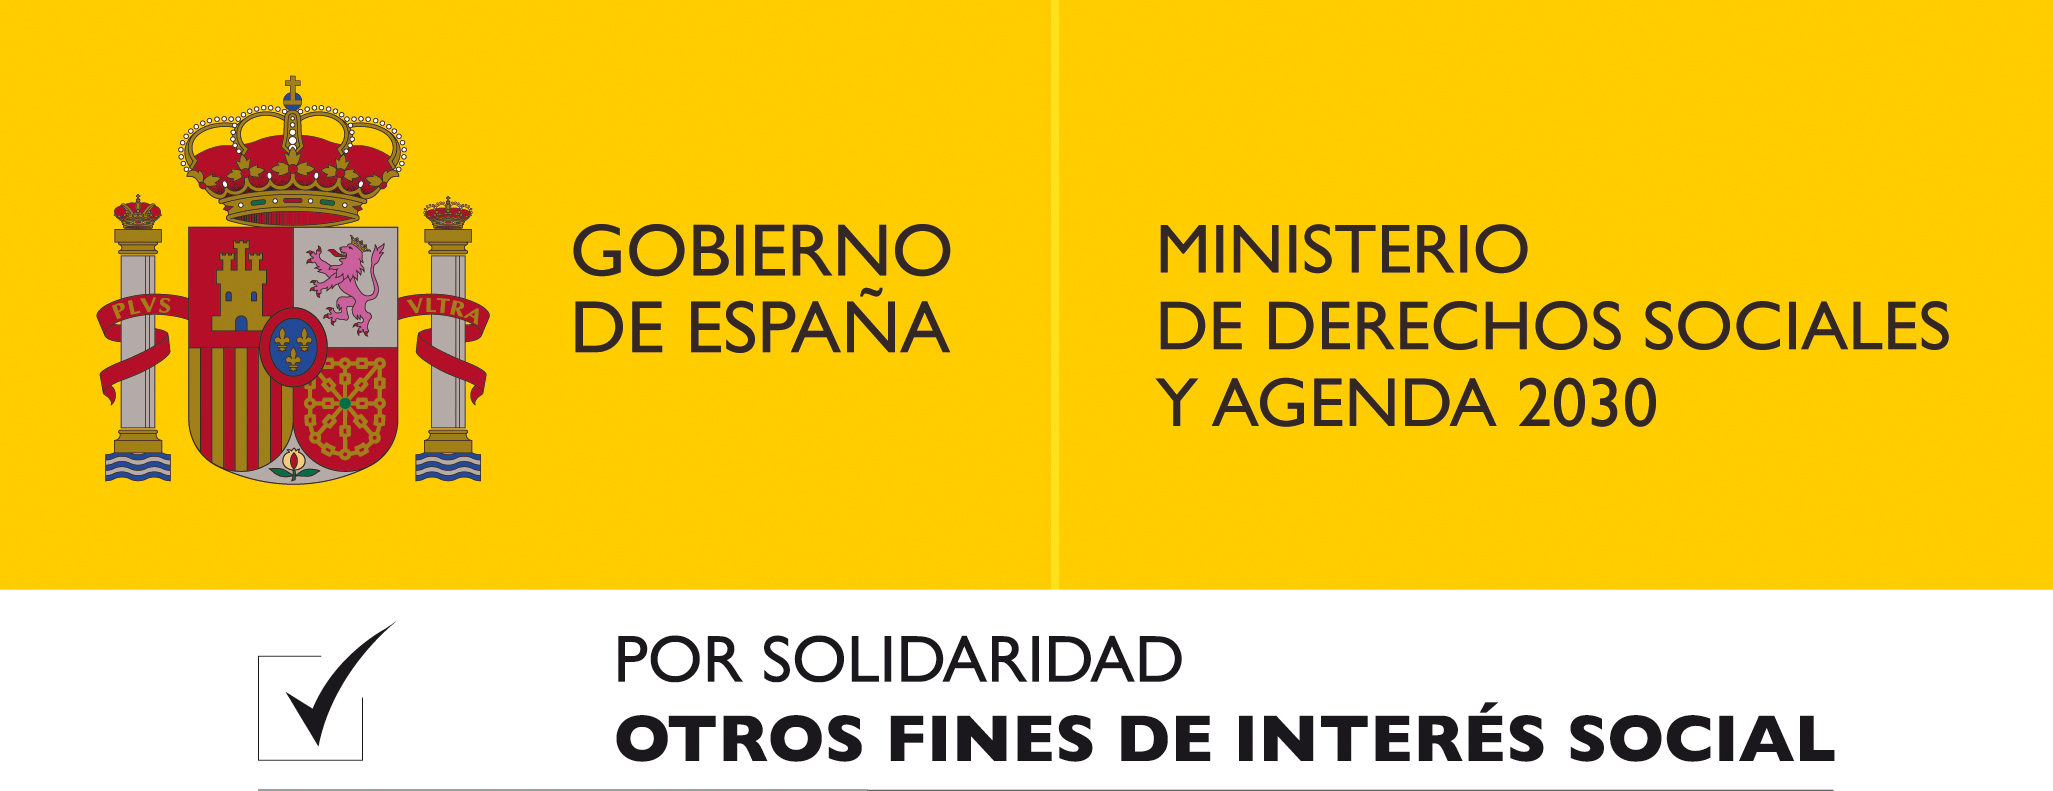 Por otros fines de interés social Gobierno de España